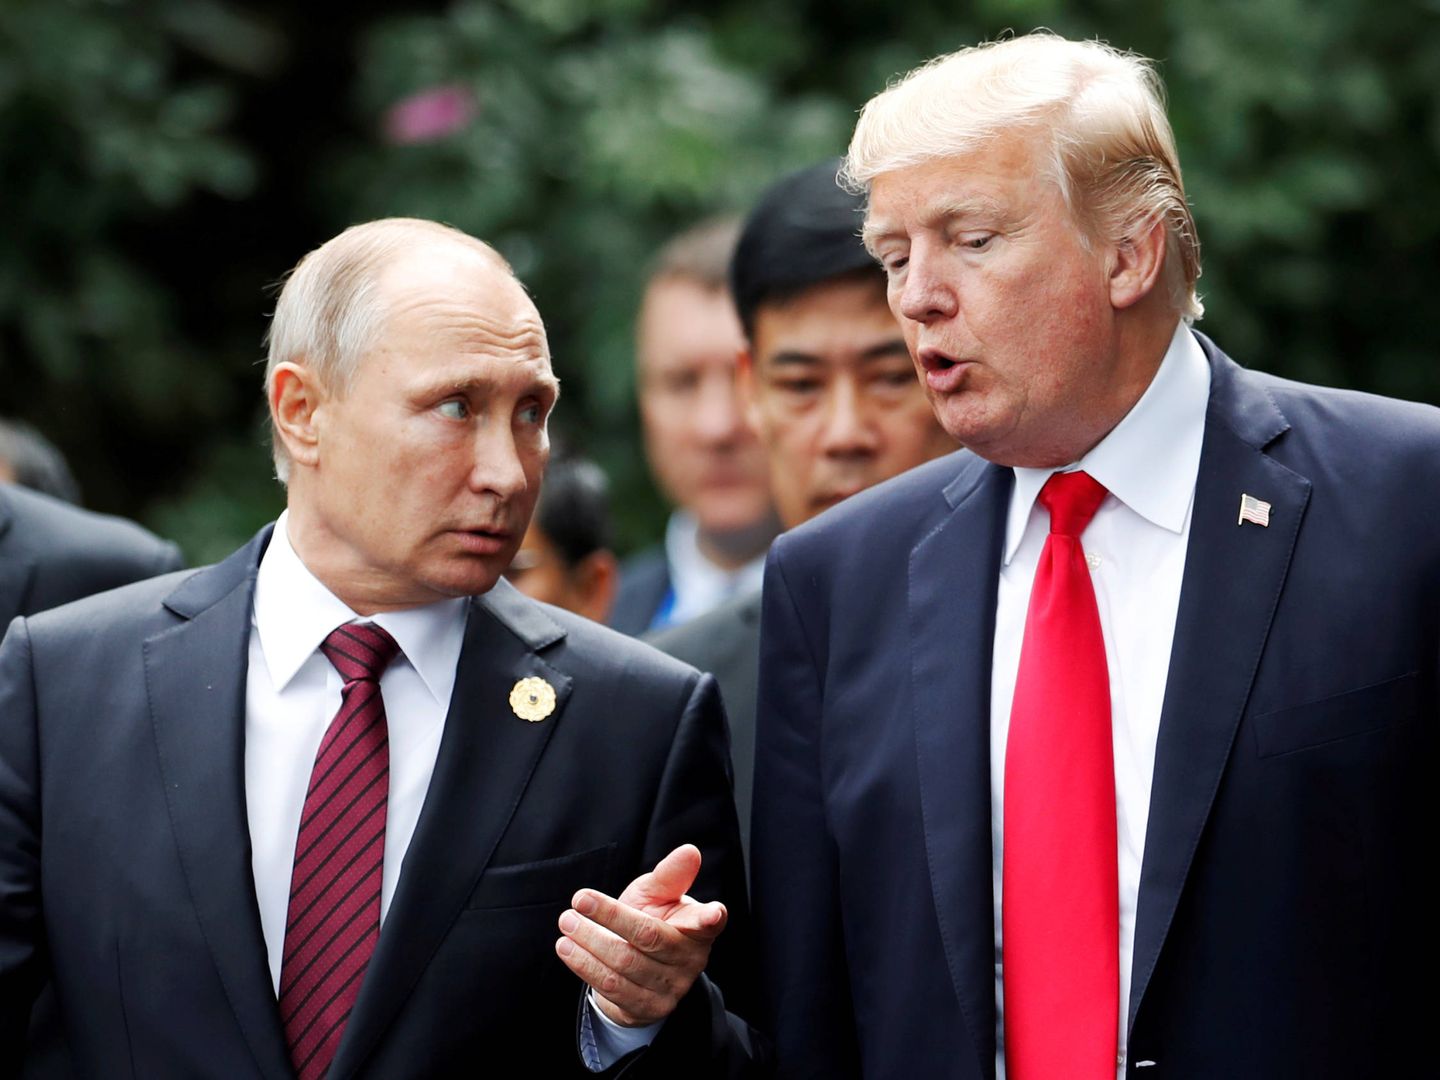 El presidente de EEUU, Donald Trump, junto al líder ruso Vladimir Putin, durante la cumbre de la APEC, en Danang, Vietnam. (Reuters)